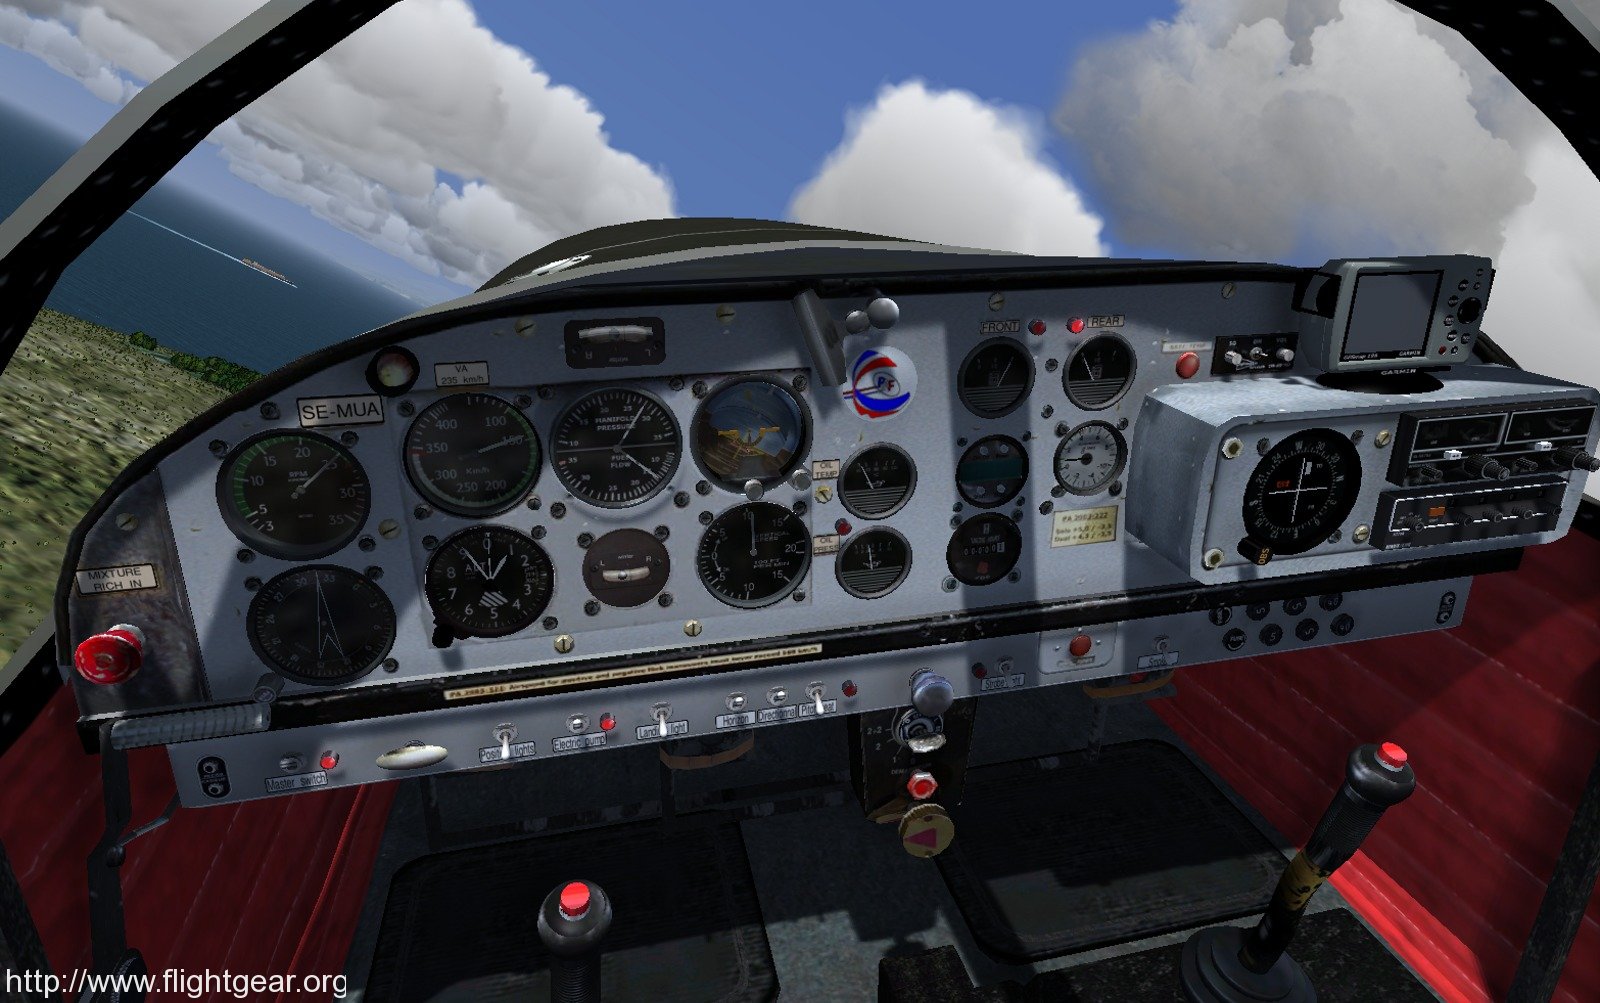 Baixar Battle of Warplanes: Simulador de Vôo Grátis - Microsoft